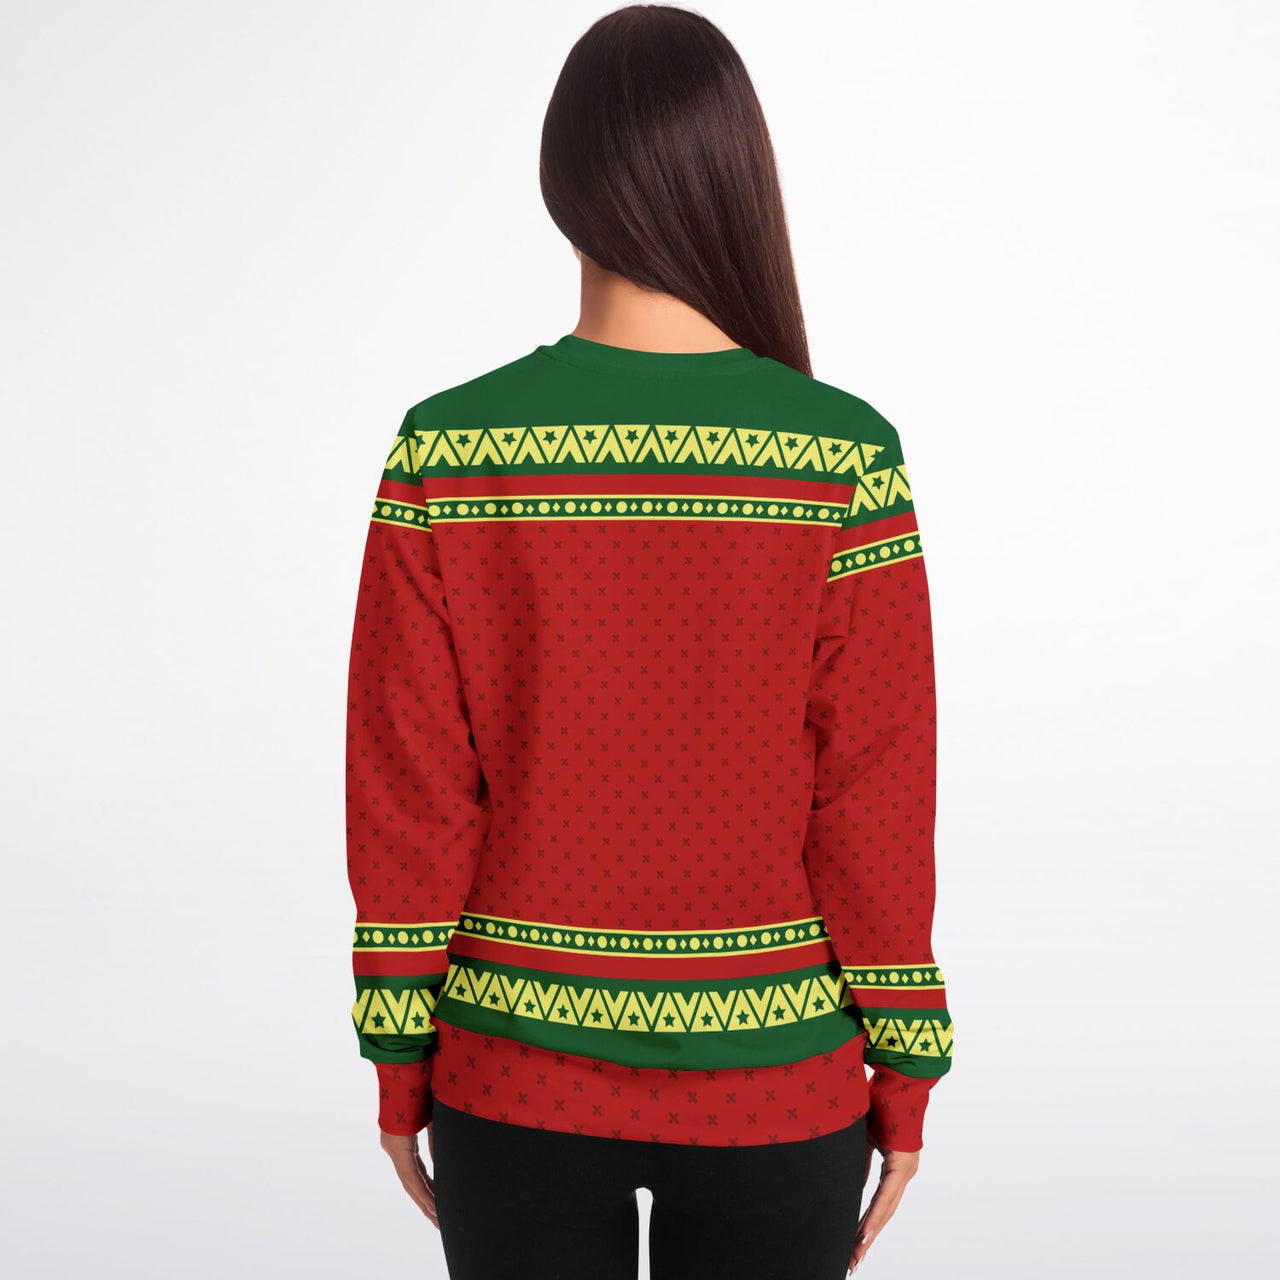 Beer Deer Ugly Christmas Fashion Sweatshirt - AOP